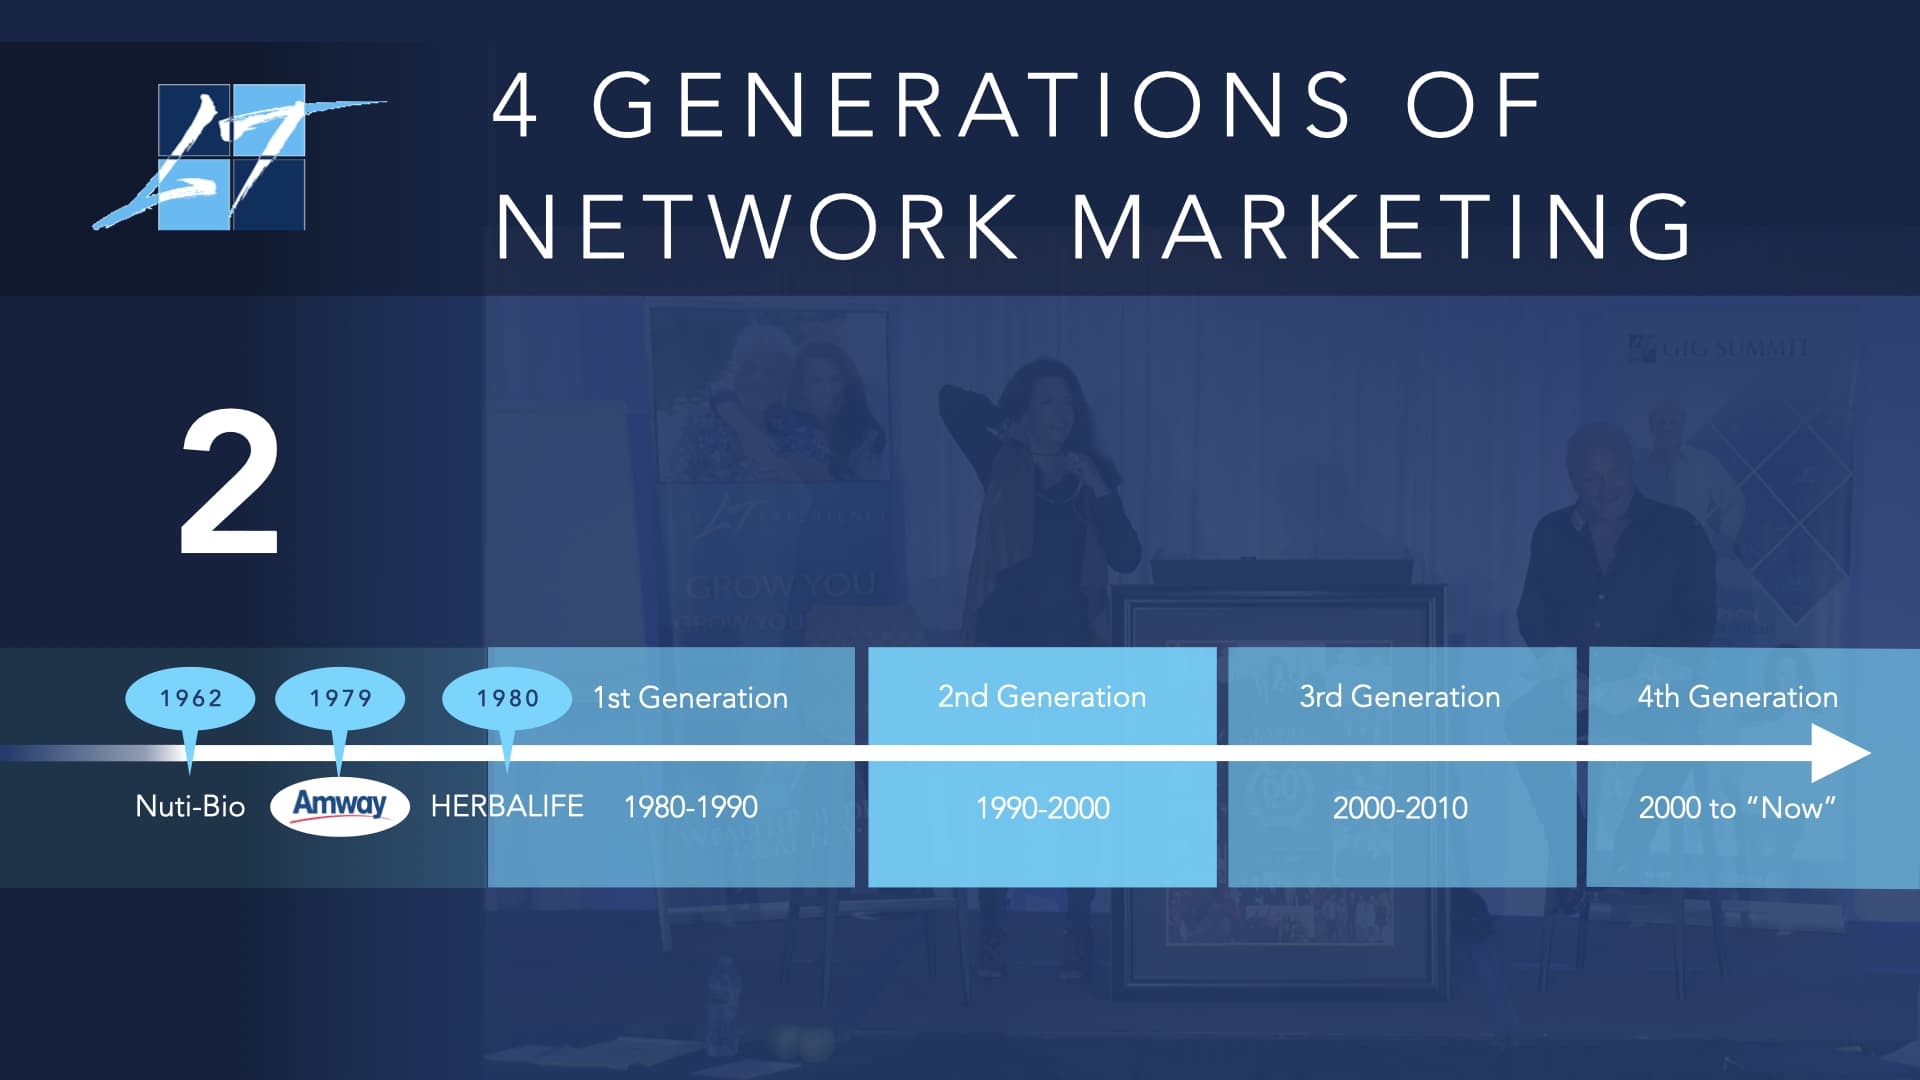 2nd Generation of Network Marketing